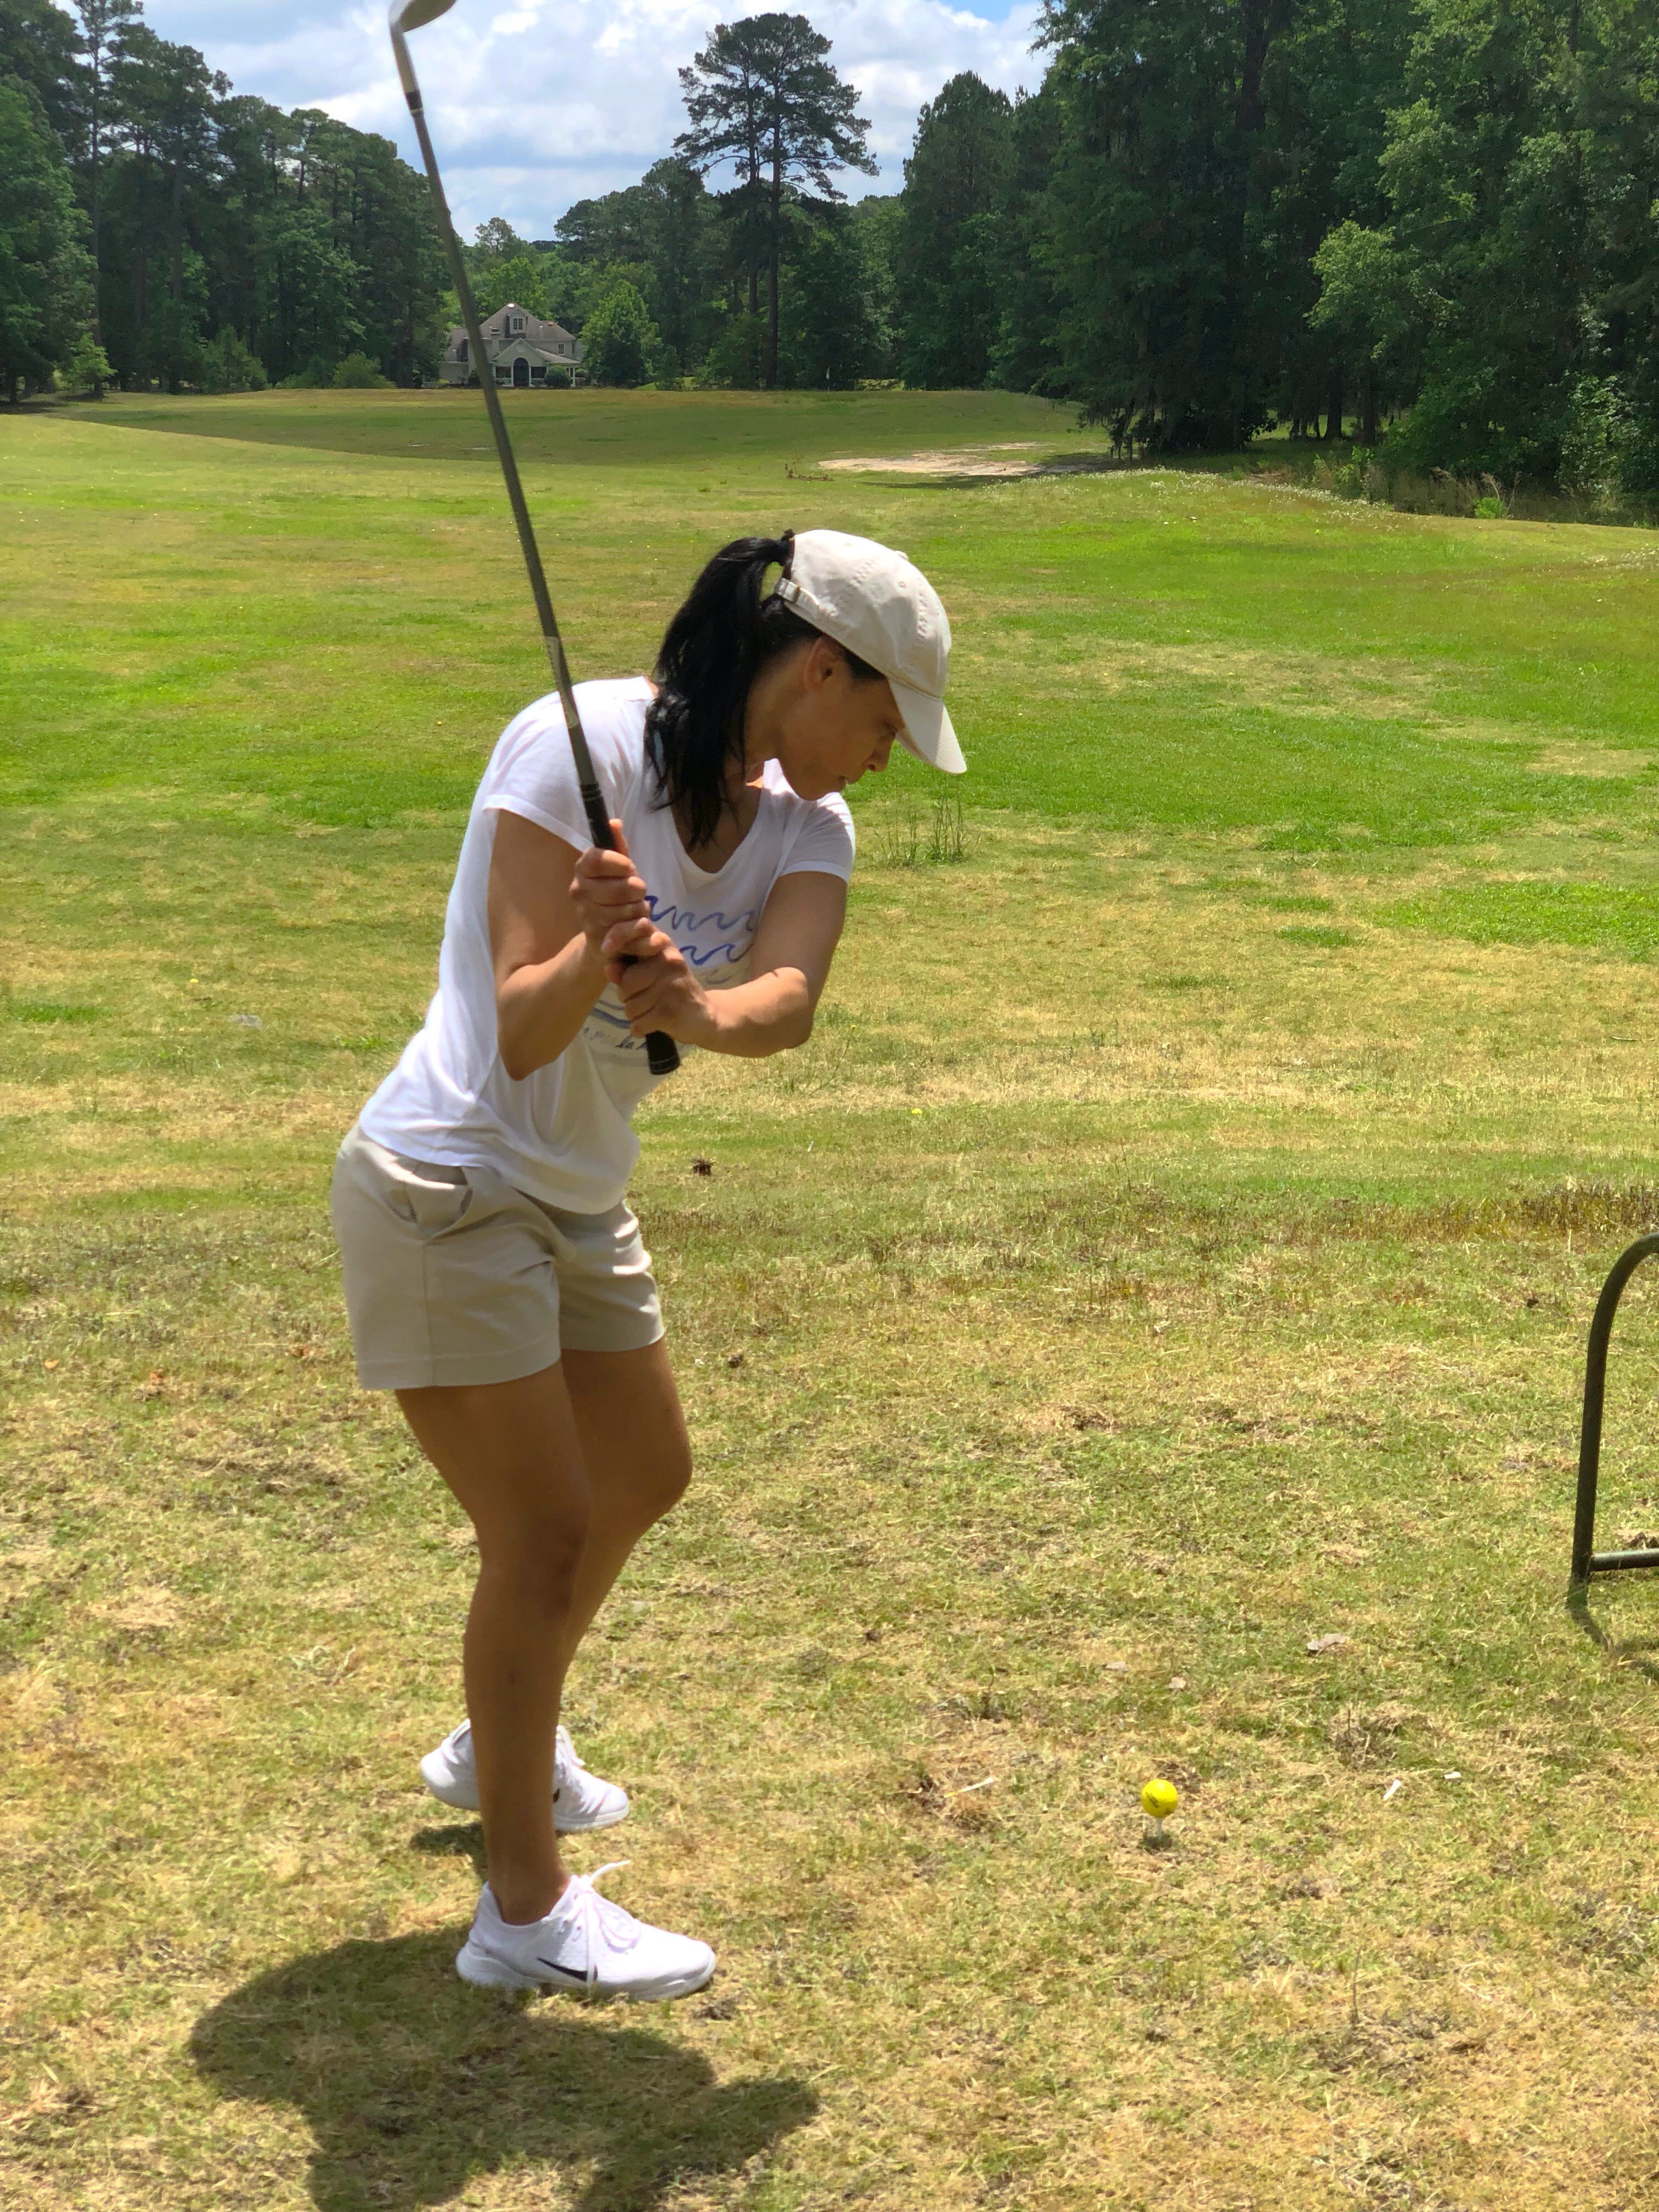 A woman in white shirt holding golf club.